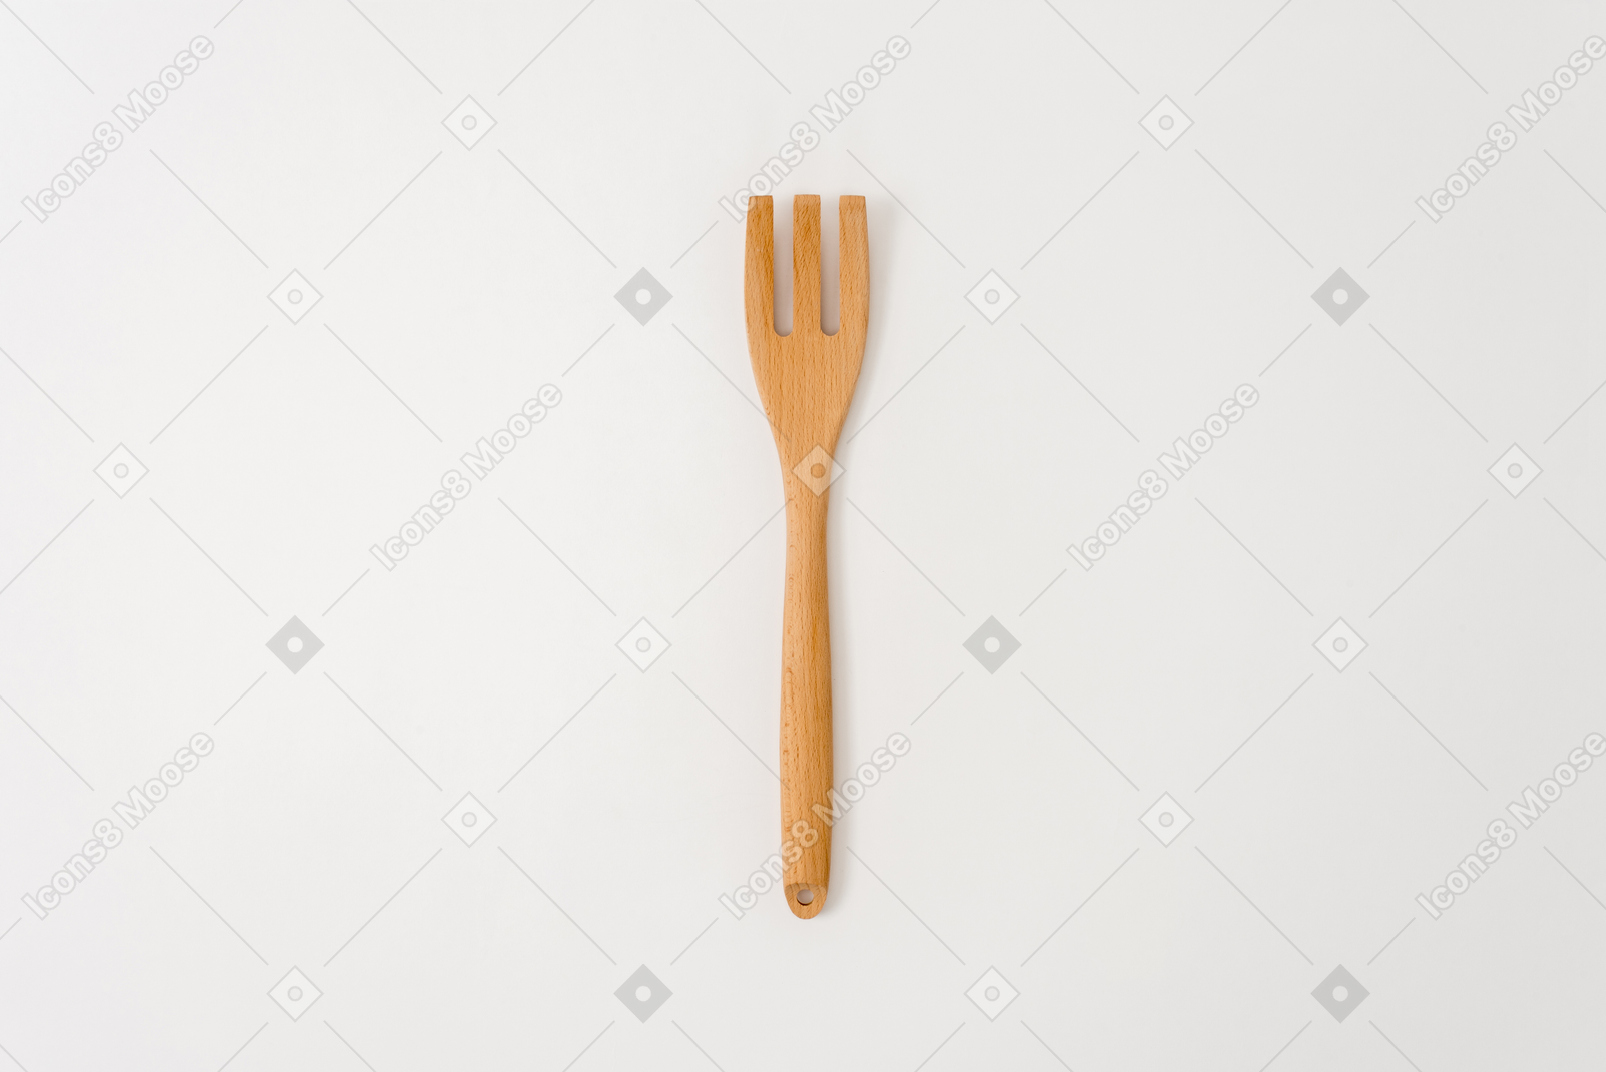 Wooden fork on white background